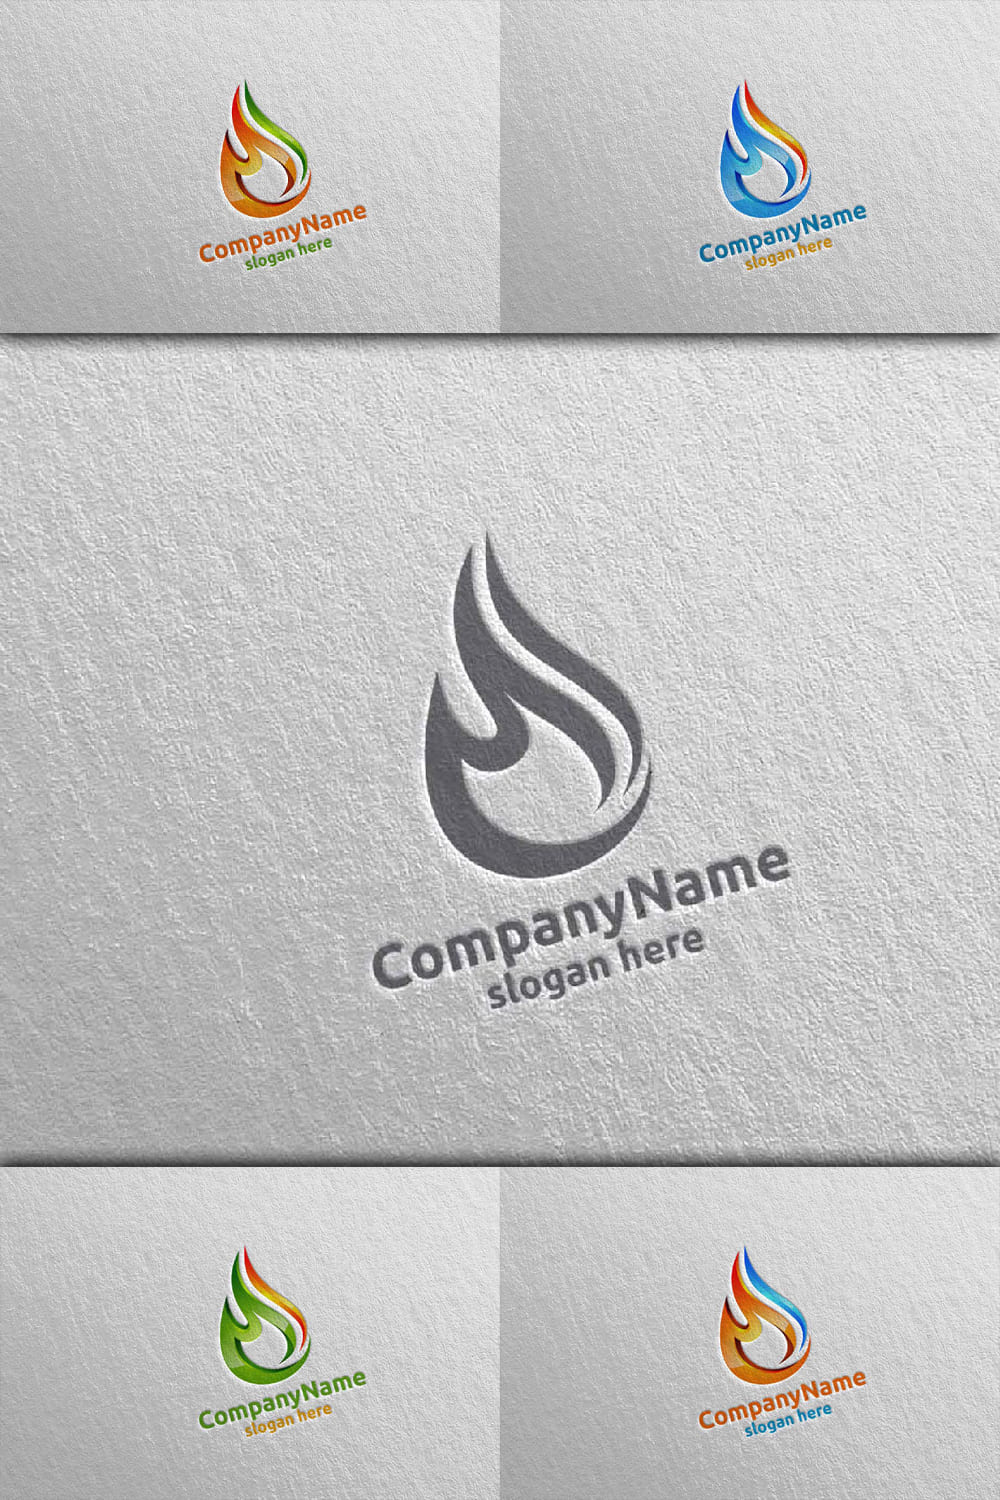 3D Fire Flame Element Logo Design - pinterest image preview.